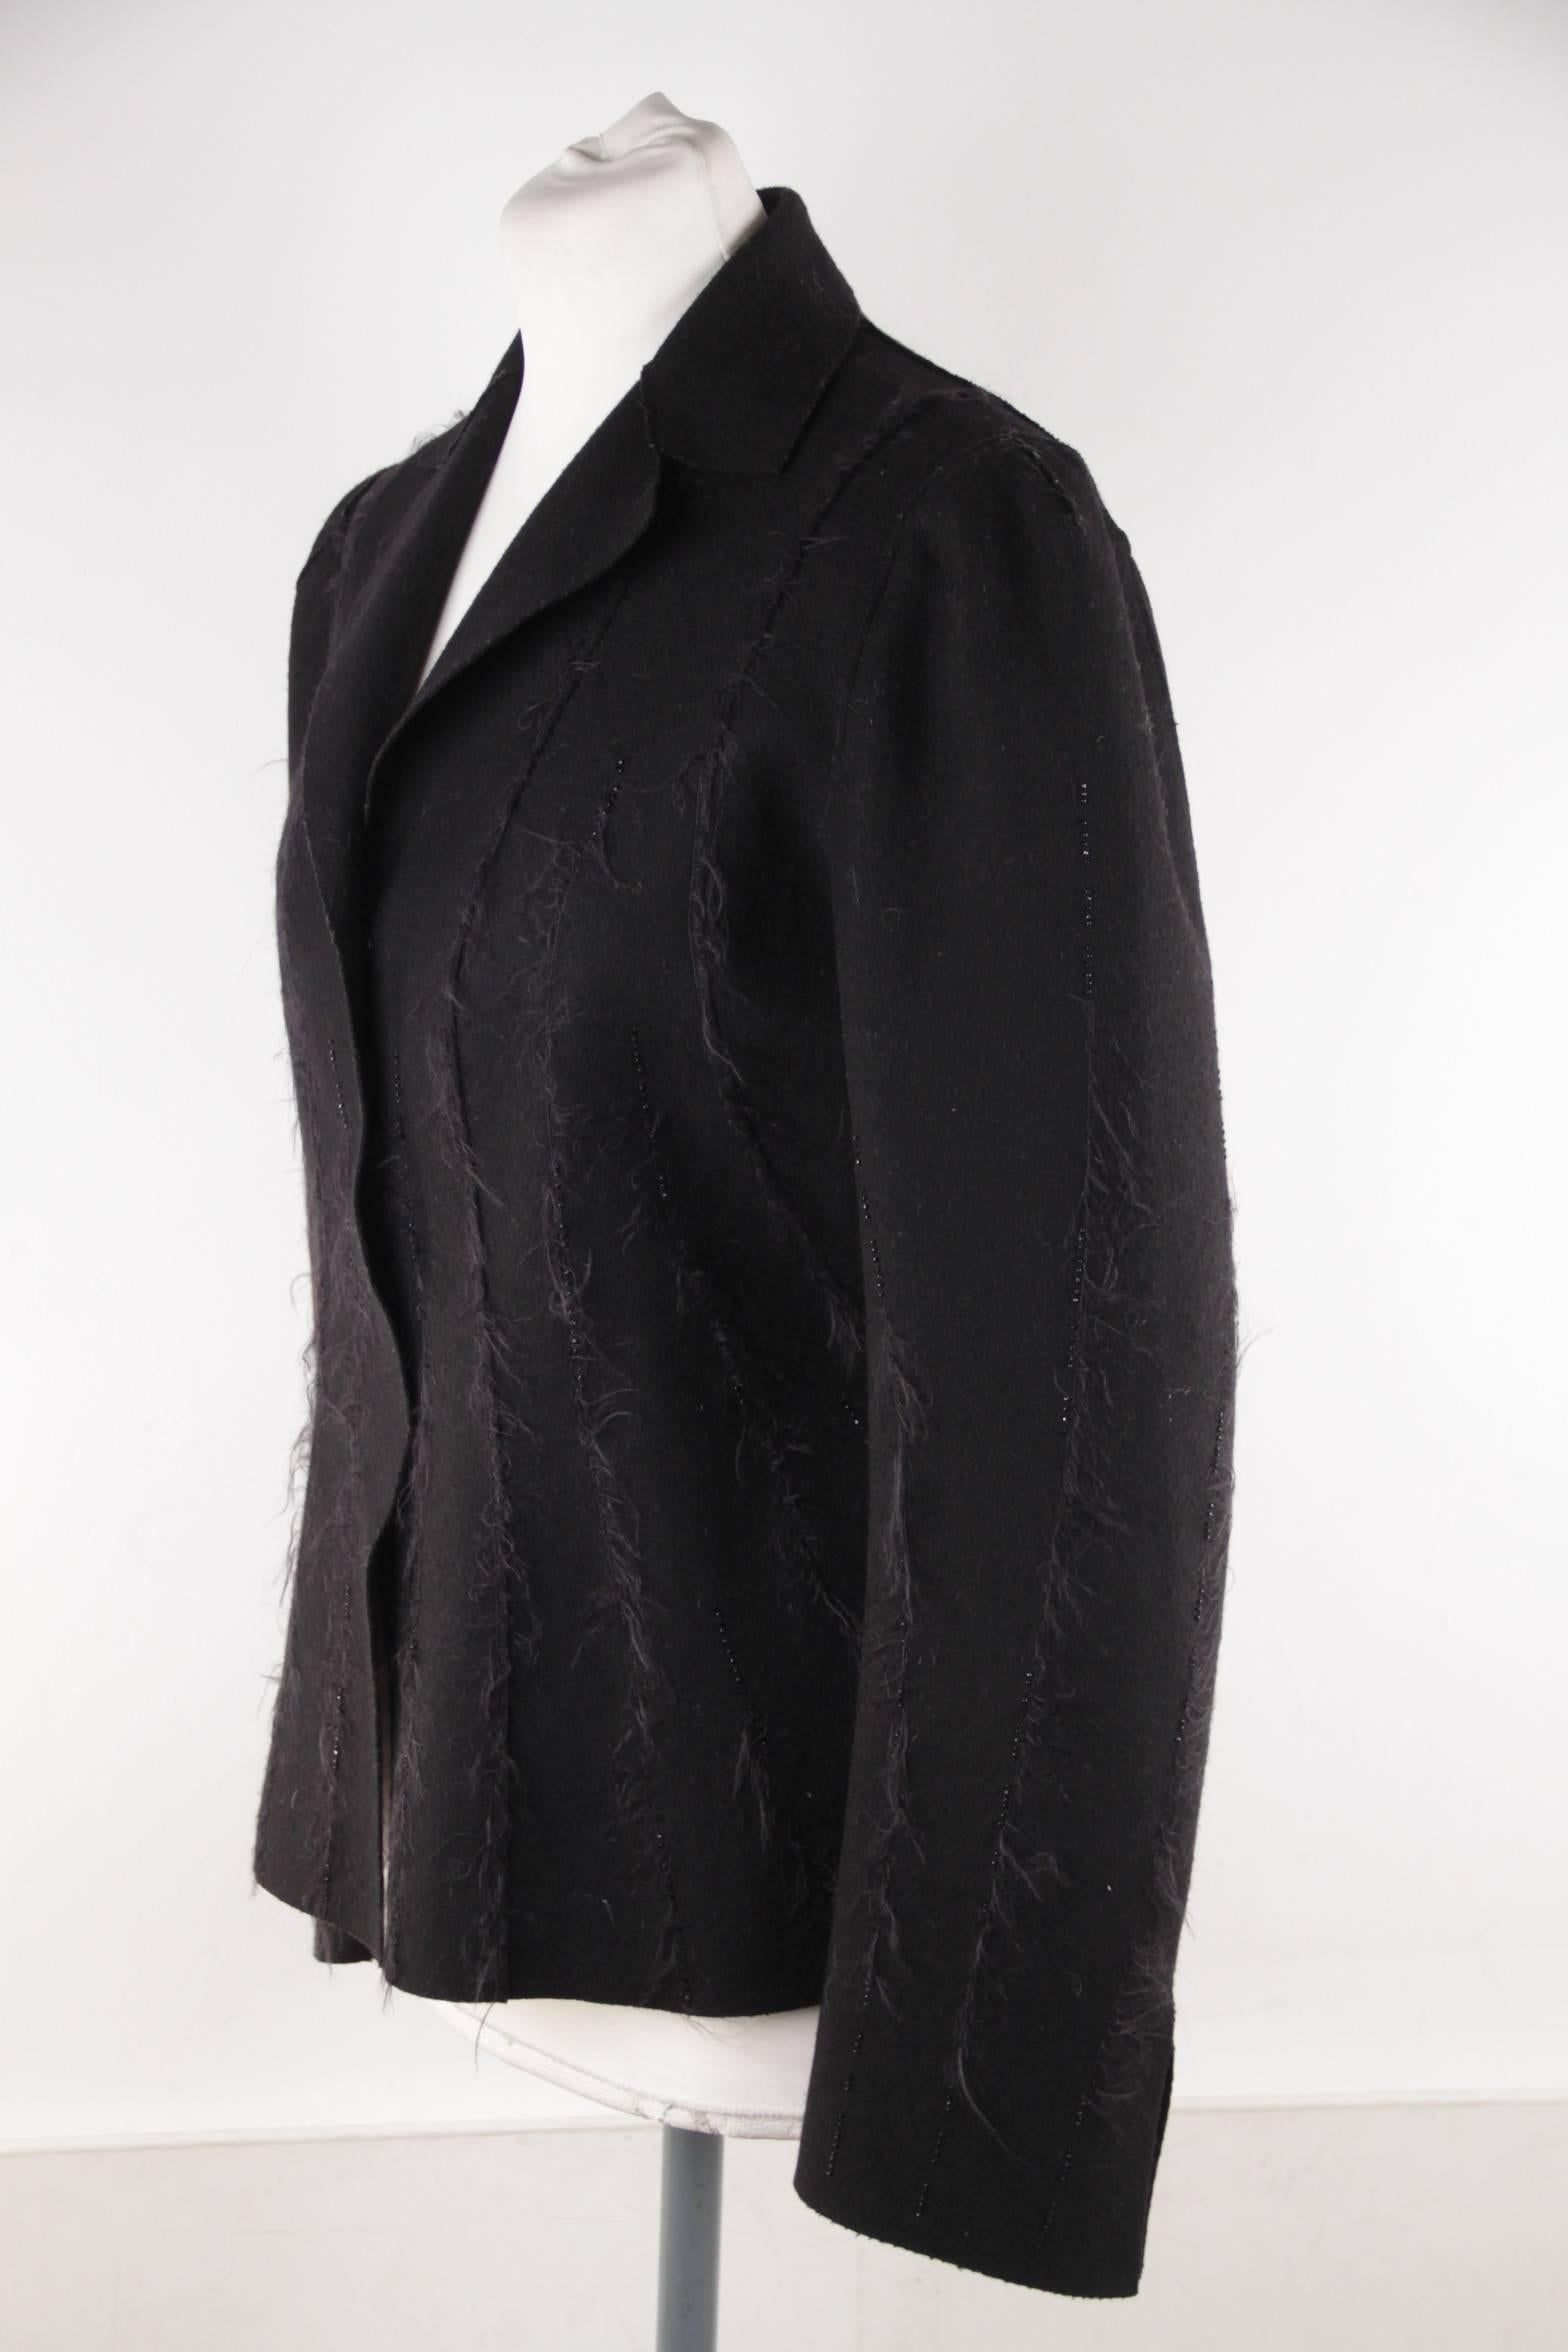 ALBERTA FERRETTI Black Wool Blend BLAZER Jacket w/ Frayed Trims SZ 42 IT In Good Condition In Rome, Rome